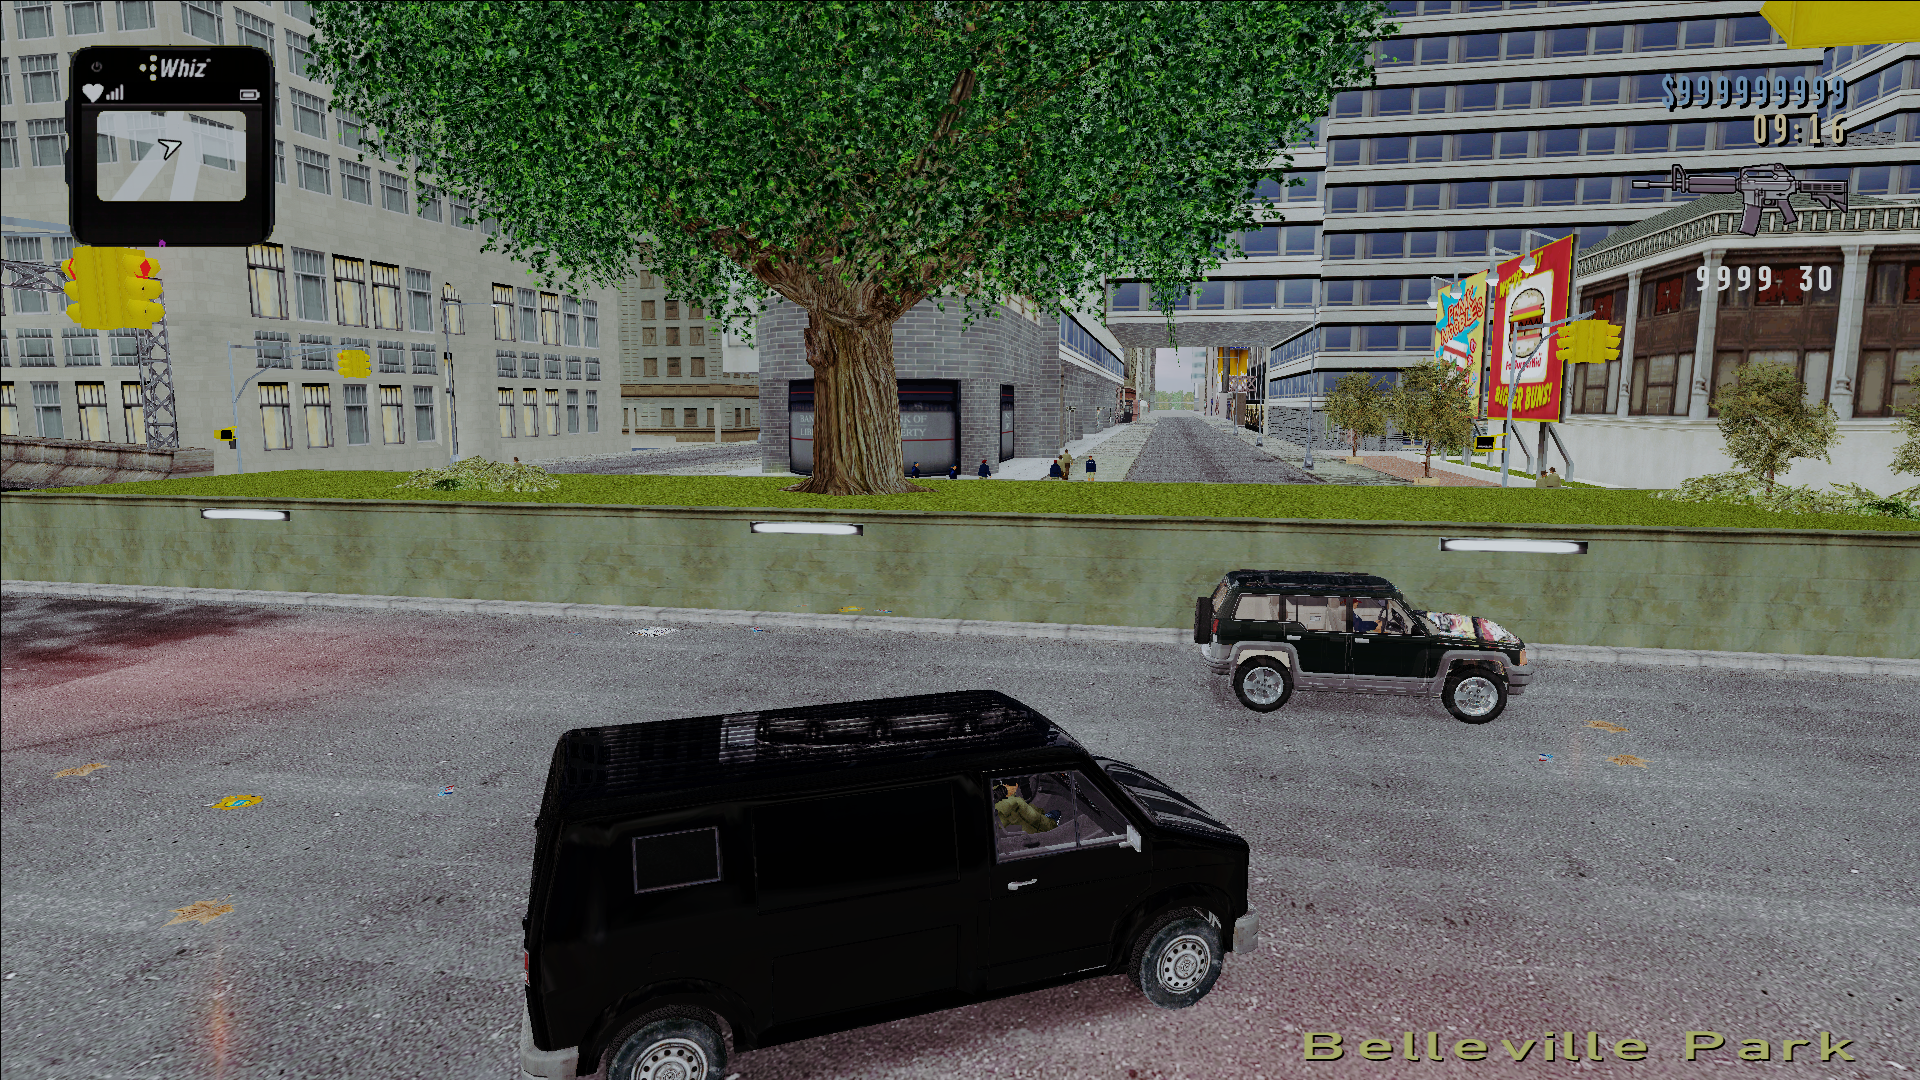 2012 Road Image Gta Iii Refresh Mod For Grand Theft Auto Iii Moddb 2443